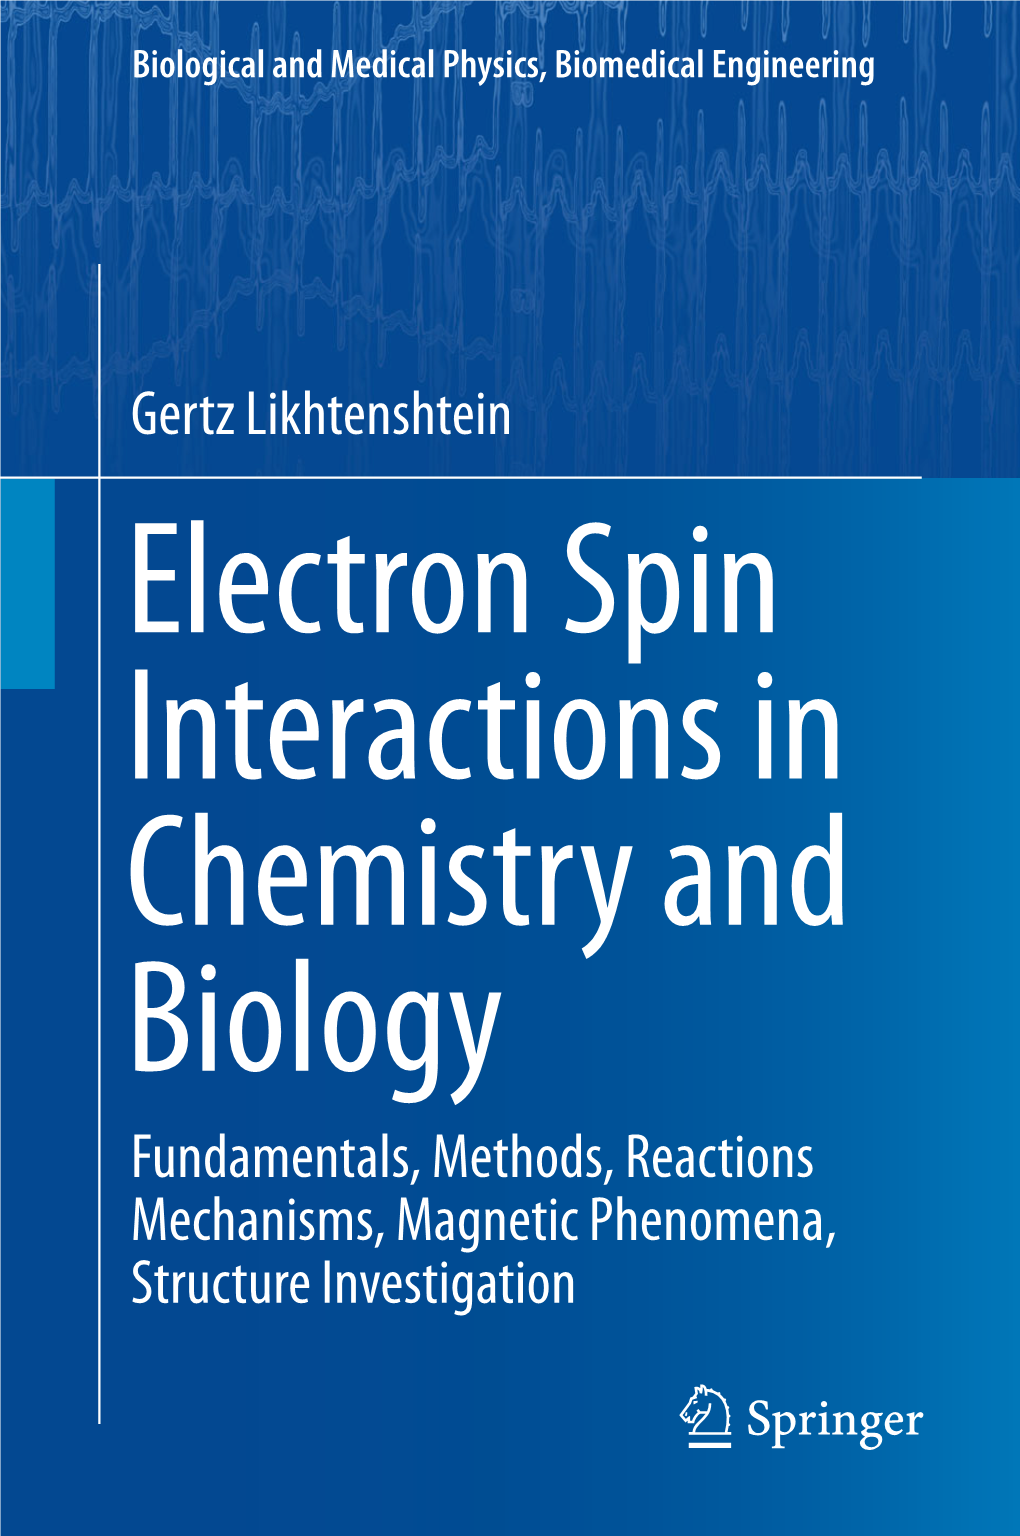 Gertz Likhtenshtein Fundamentals, Methods, Reactions Mechanisms, Magnetic Phenomena, Structure Investigation